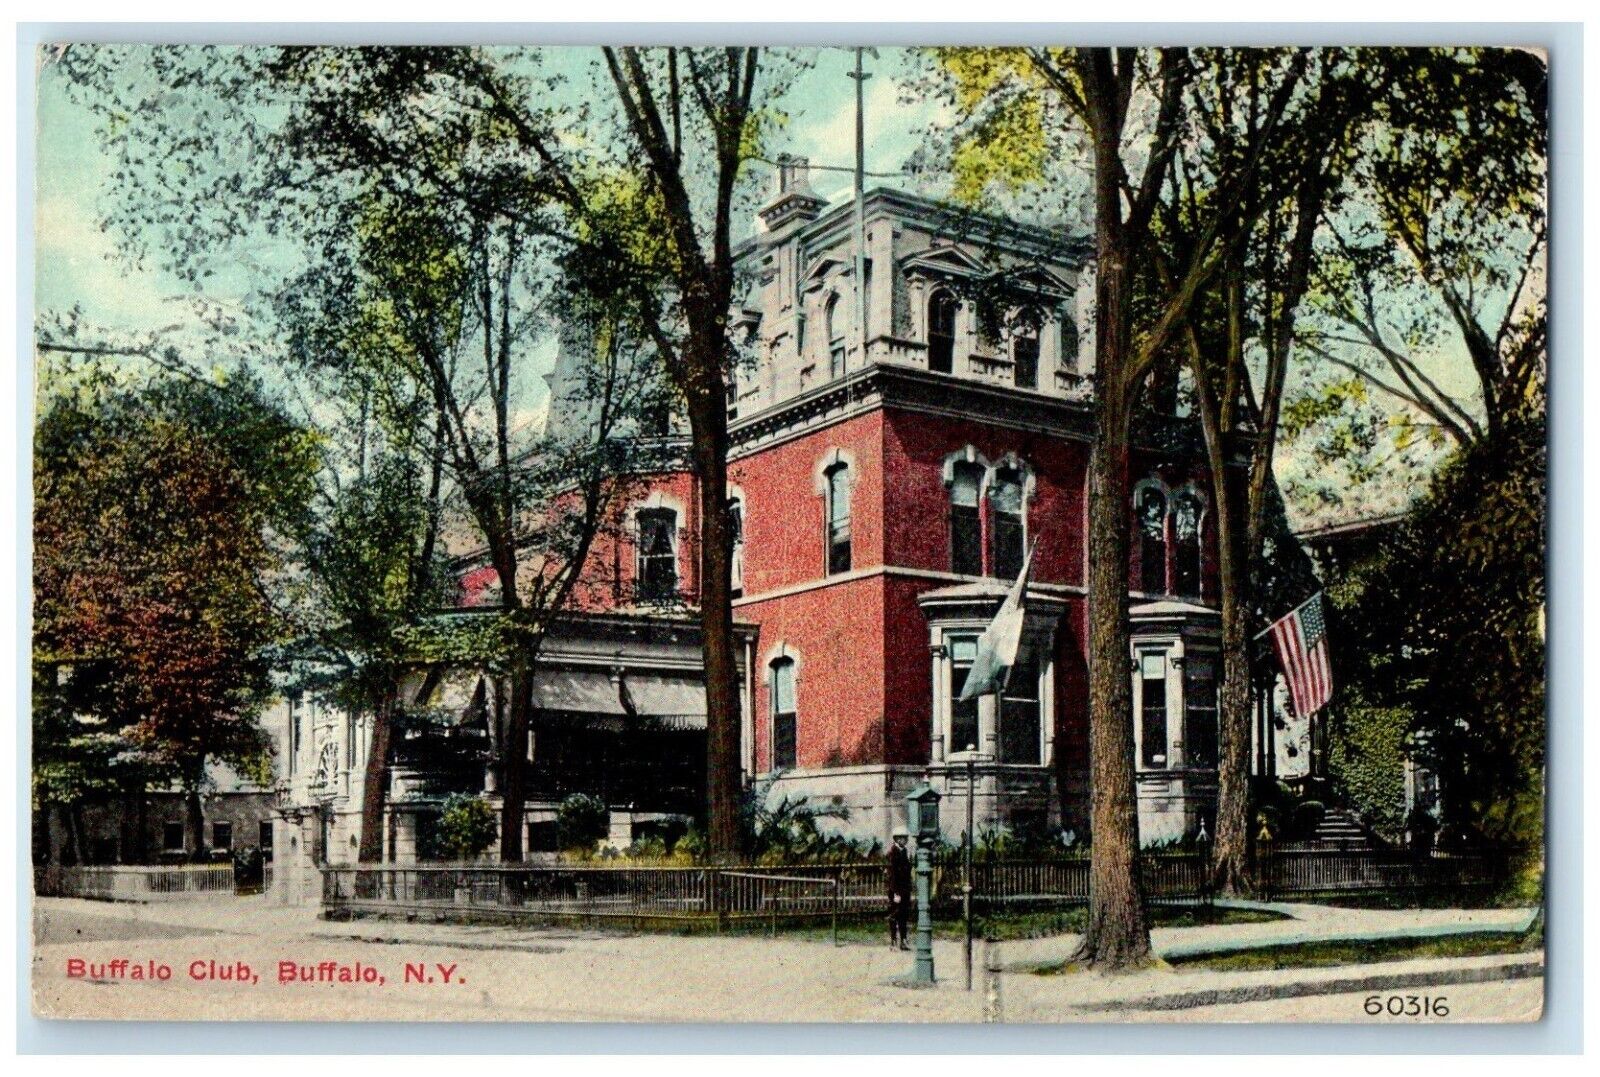 1912 Buffalo Club Exterior Building Buffalo New York NY Vintage Antique Postcard